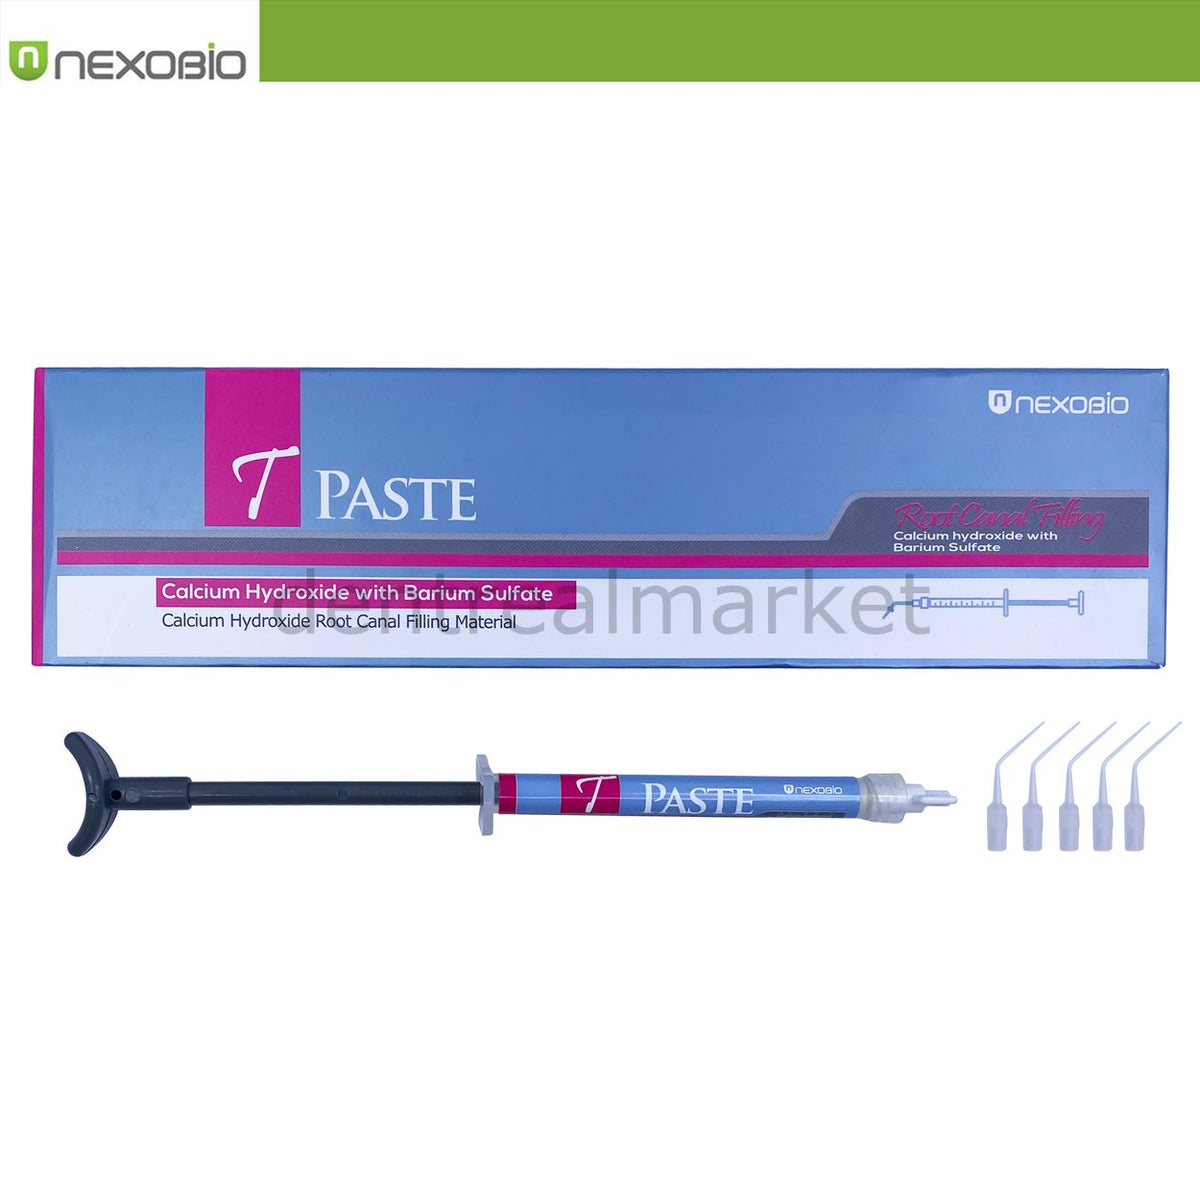 DentrealStore - Nexobio T-Paste Calcium Hydroxide Material with Barium Sulphate